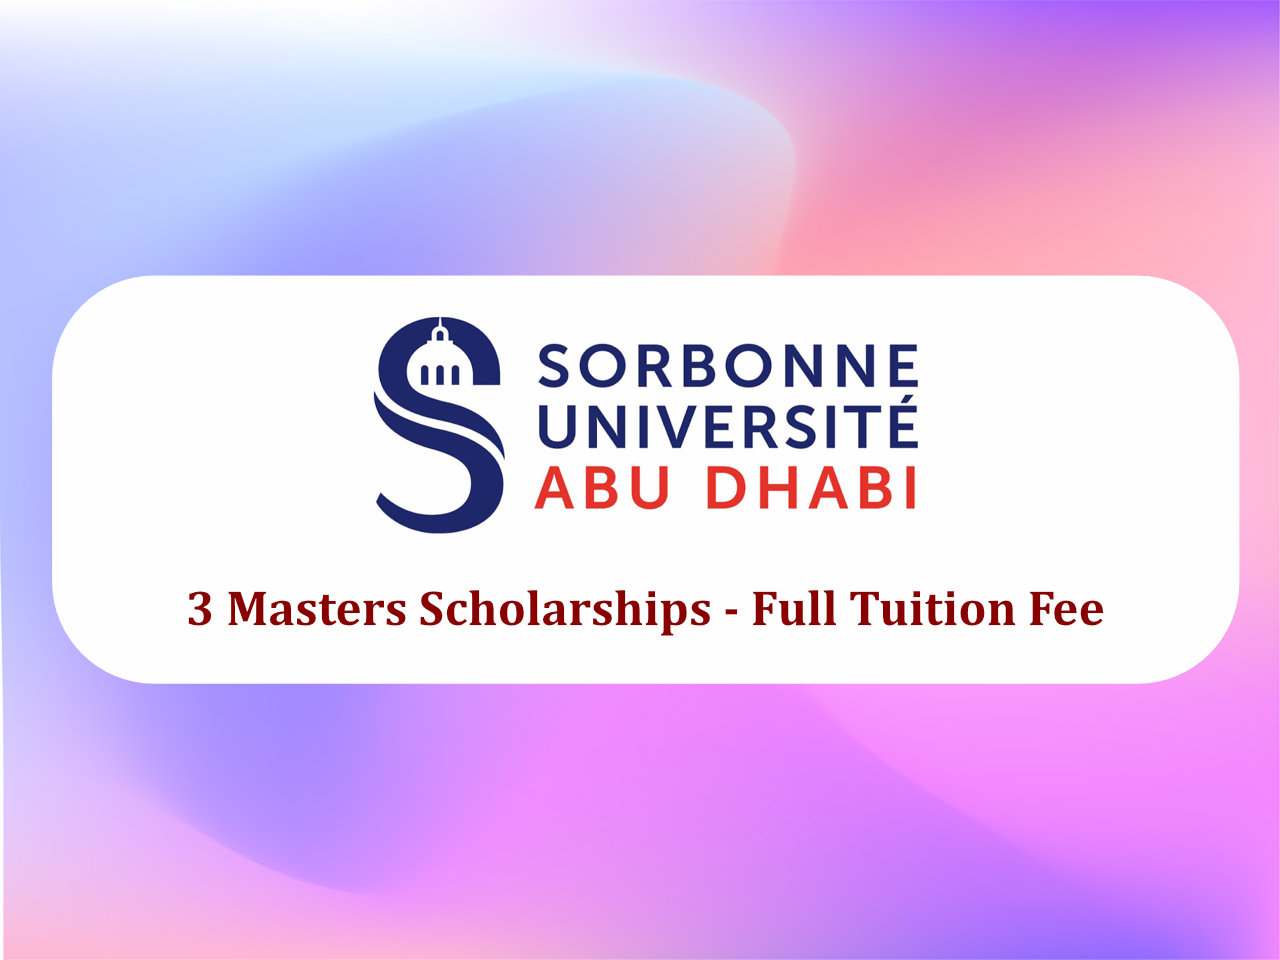 Sorbonne University Abu Dhabi Masters Scholarships Full Tuition Fee